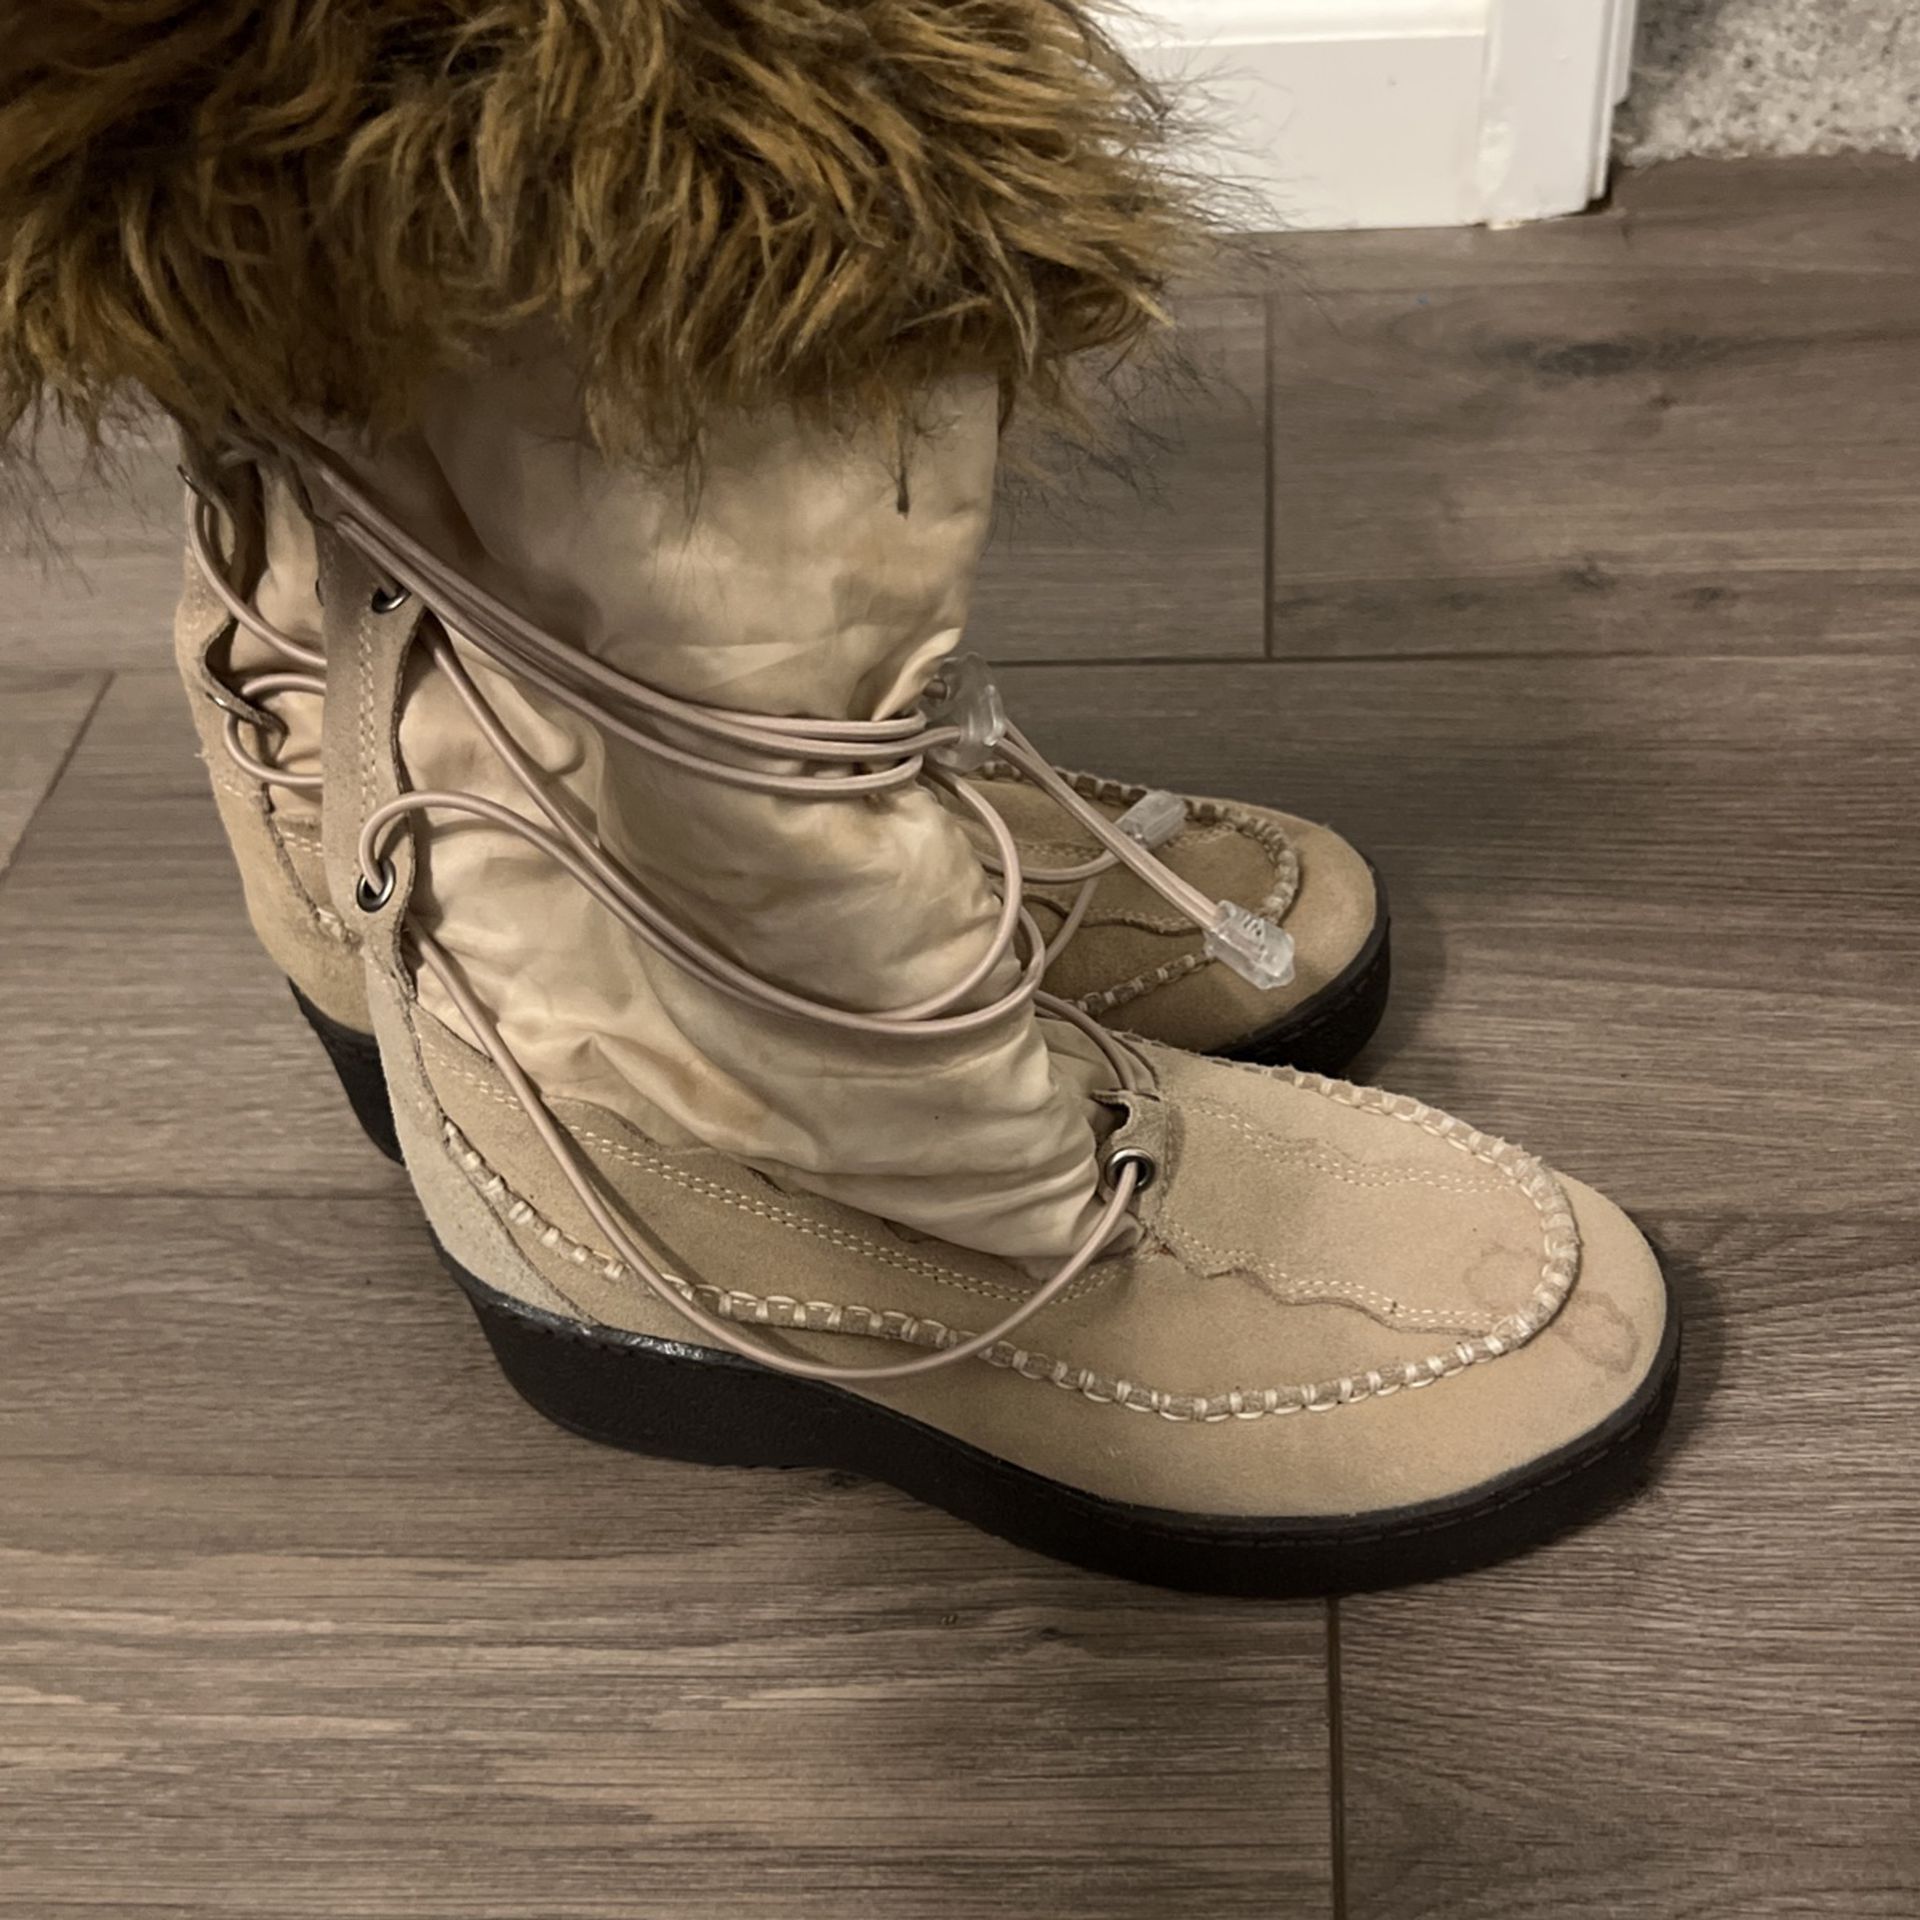 Tan Fur Boots Size 7.5